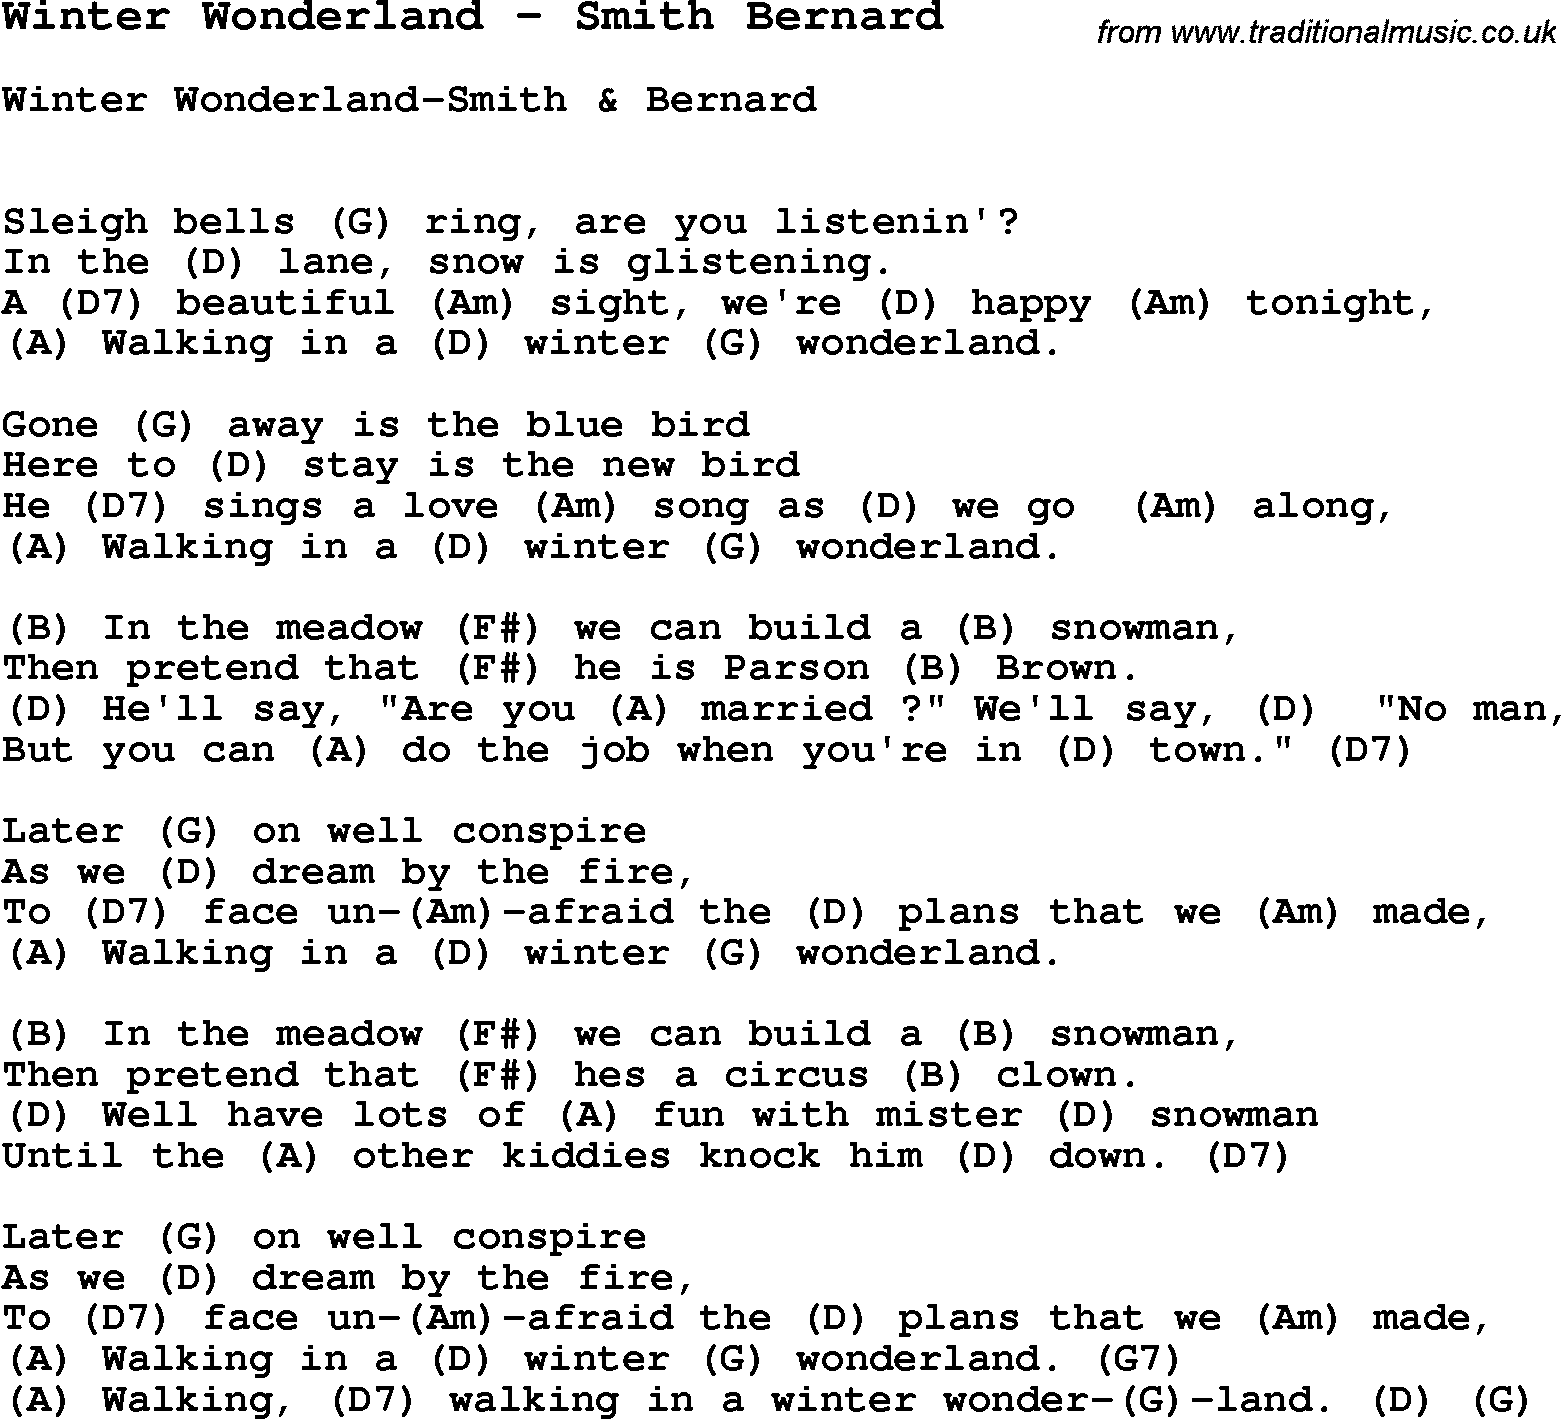 Song Winter Wonderland by Smith Bernard, with lyrics for vocal performance and accompaniment chords for Ukulele, Guitar Banjo etc.